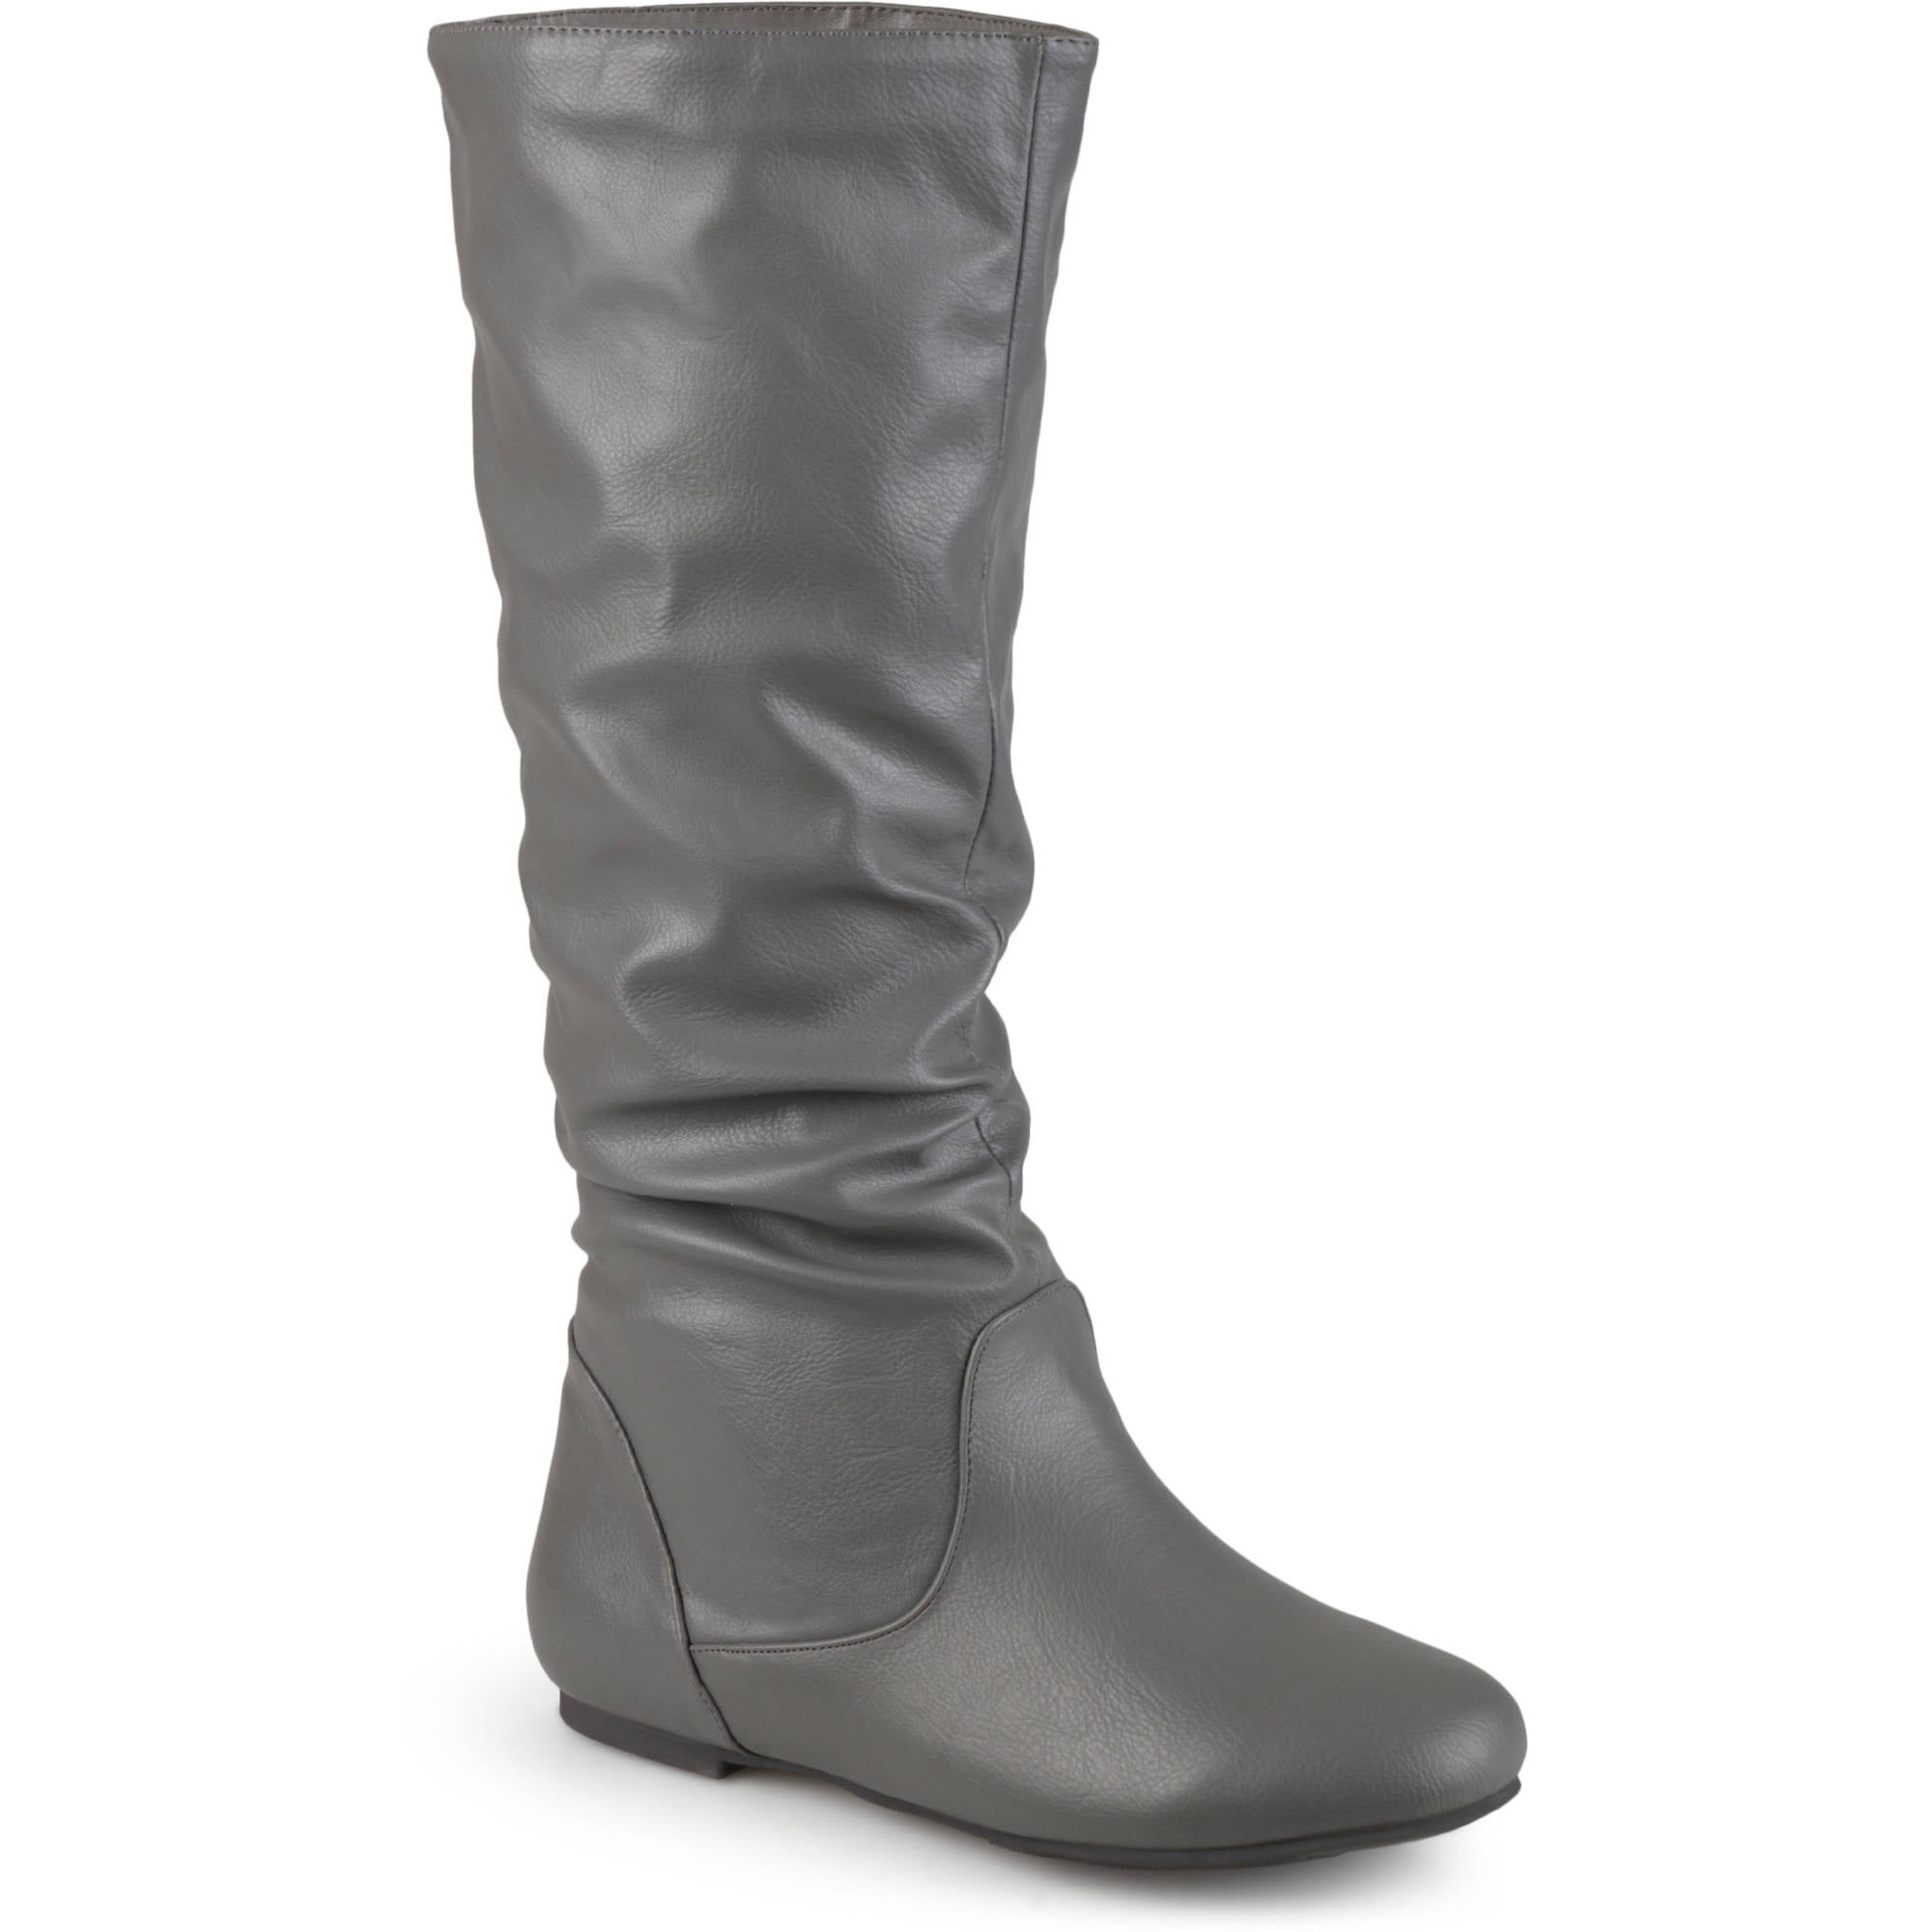 Womens Slouch Riding Mid-Calf Boots - Walmart.com